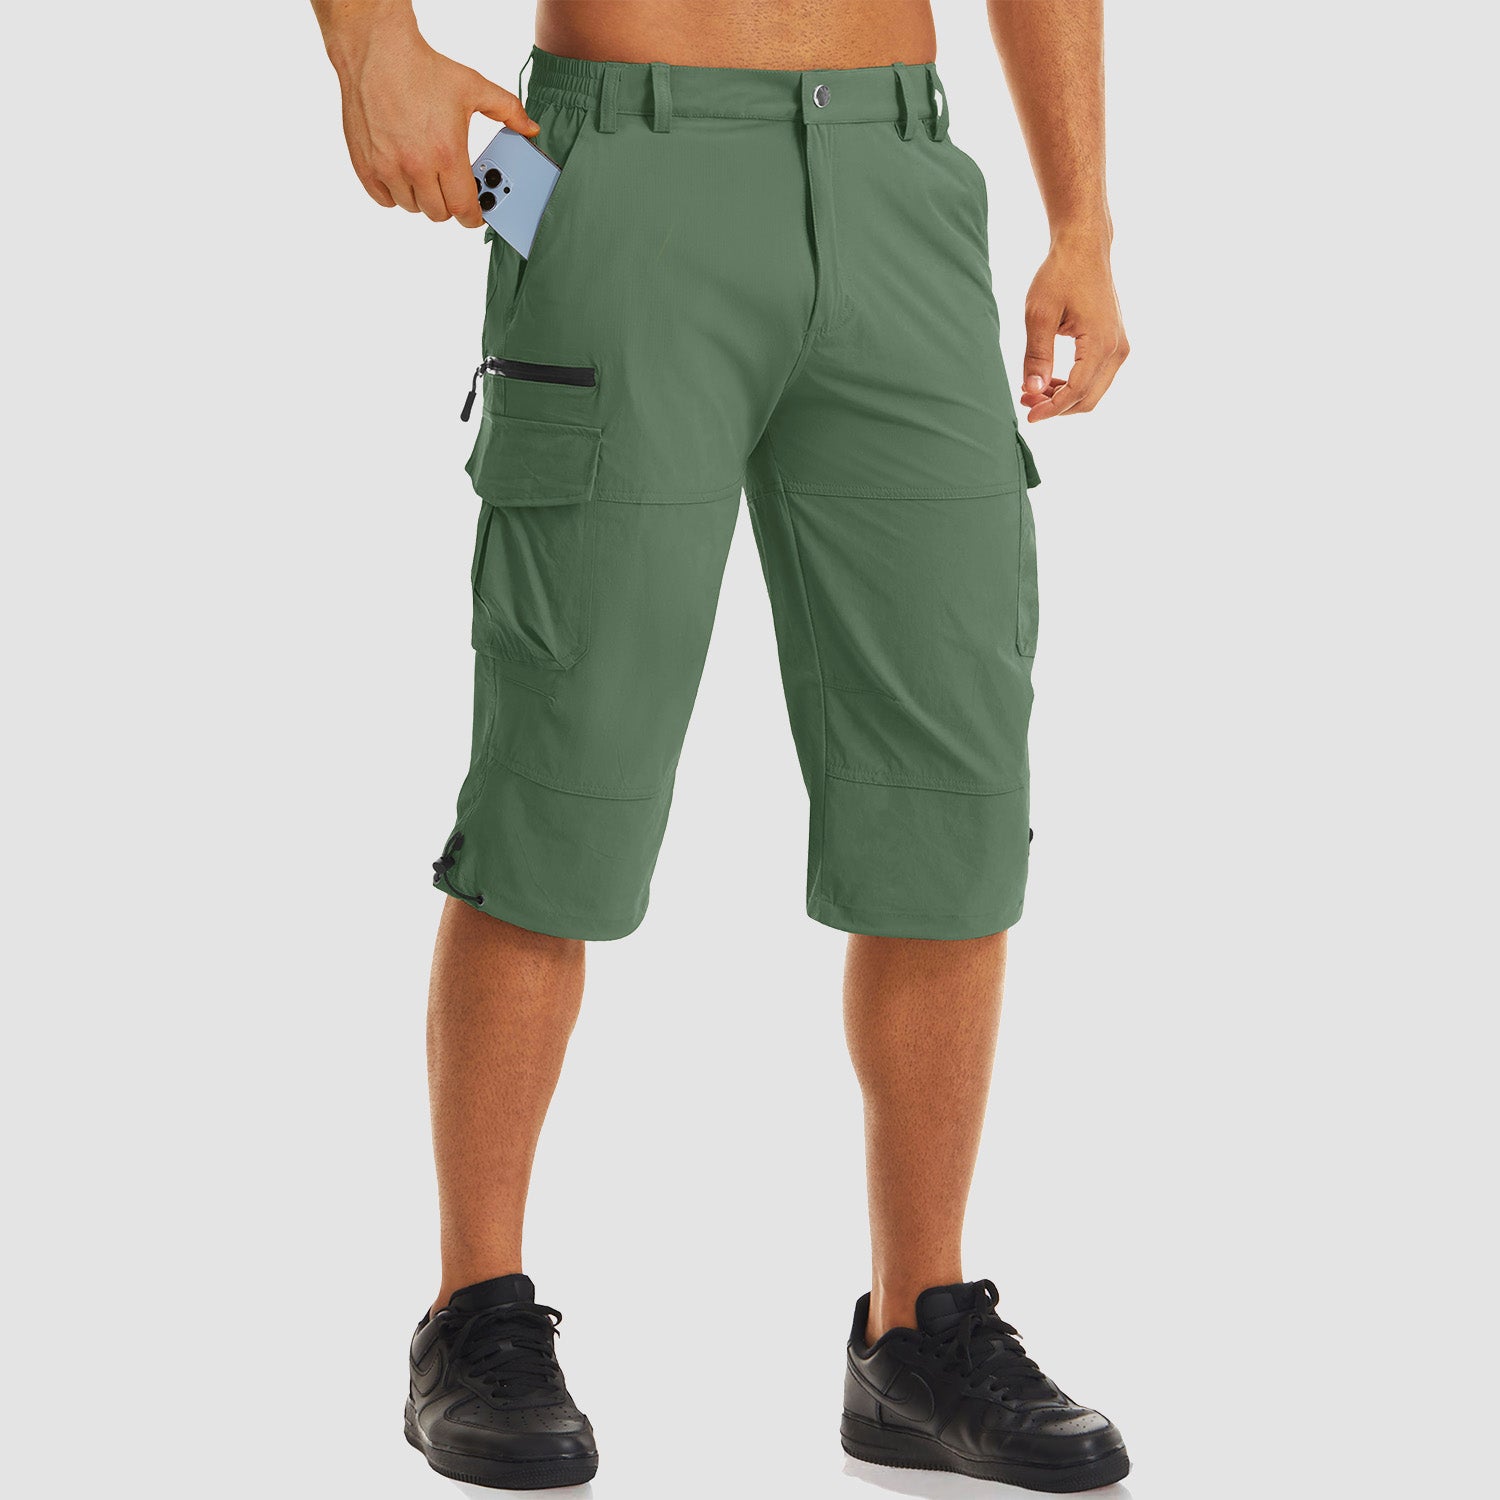 Men's 3/4 Capri Quick Dry Sports Shorts